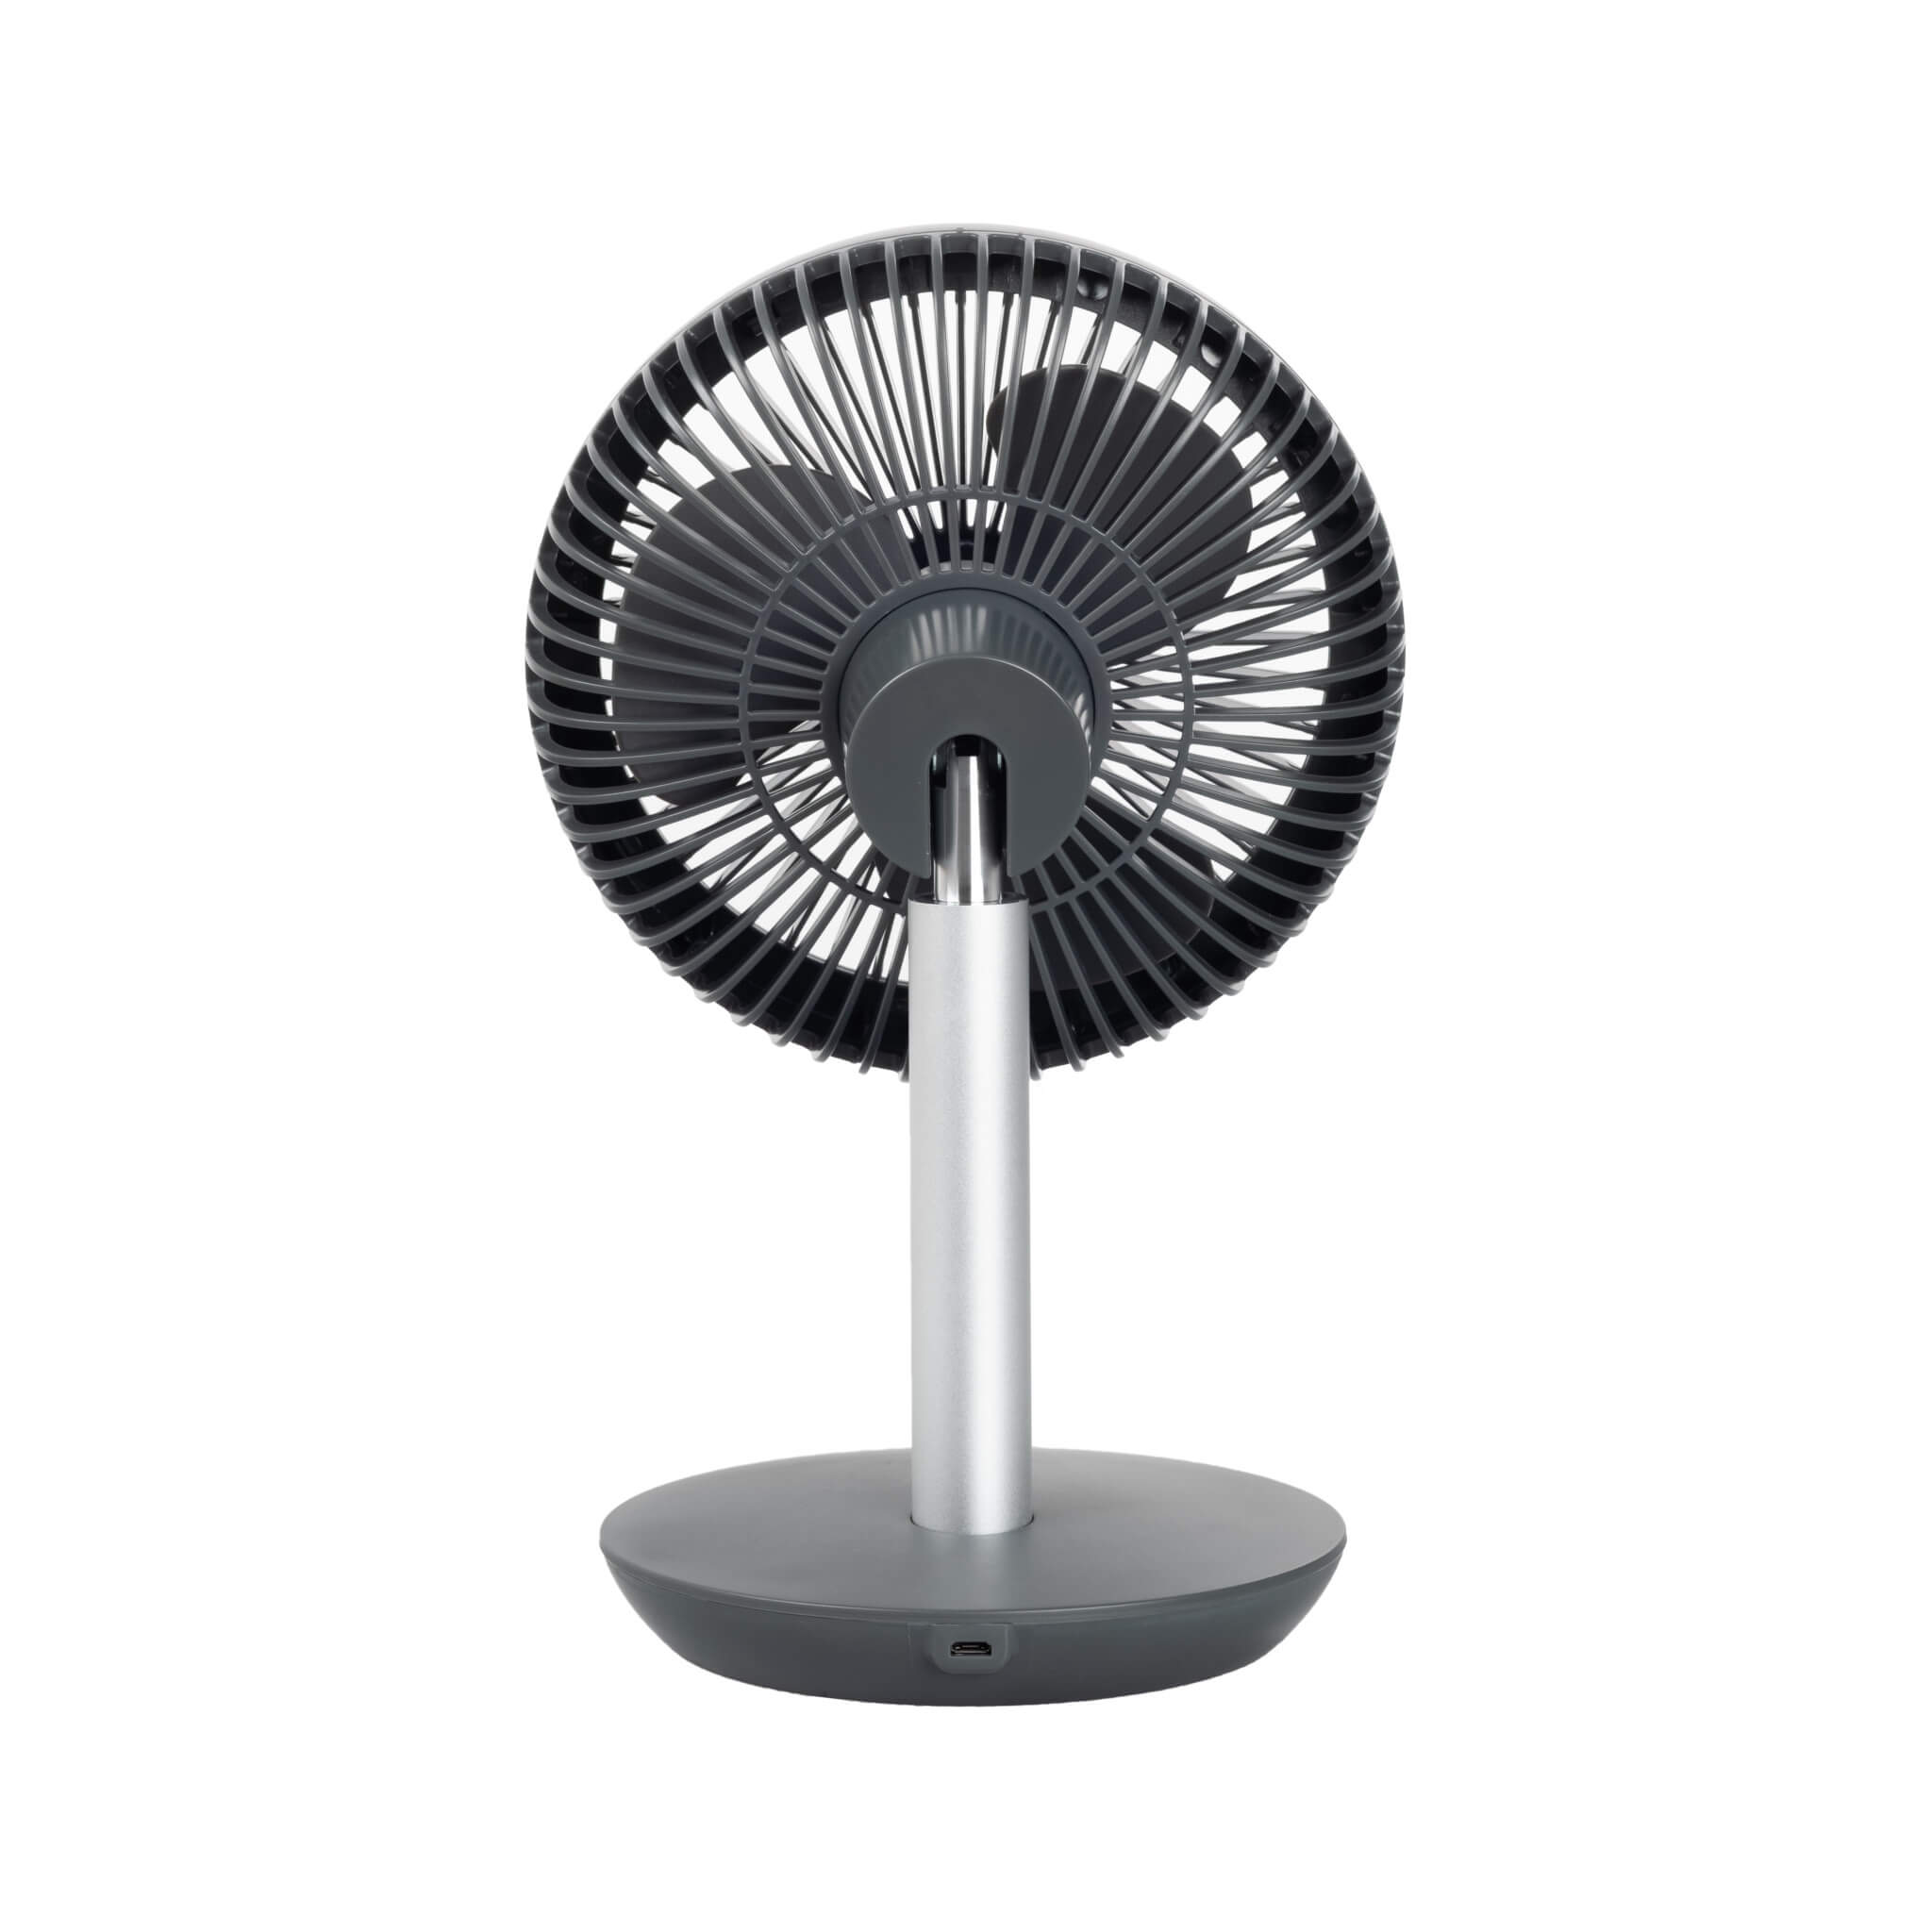 Eurom Vento Cordless Fan Ventilator